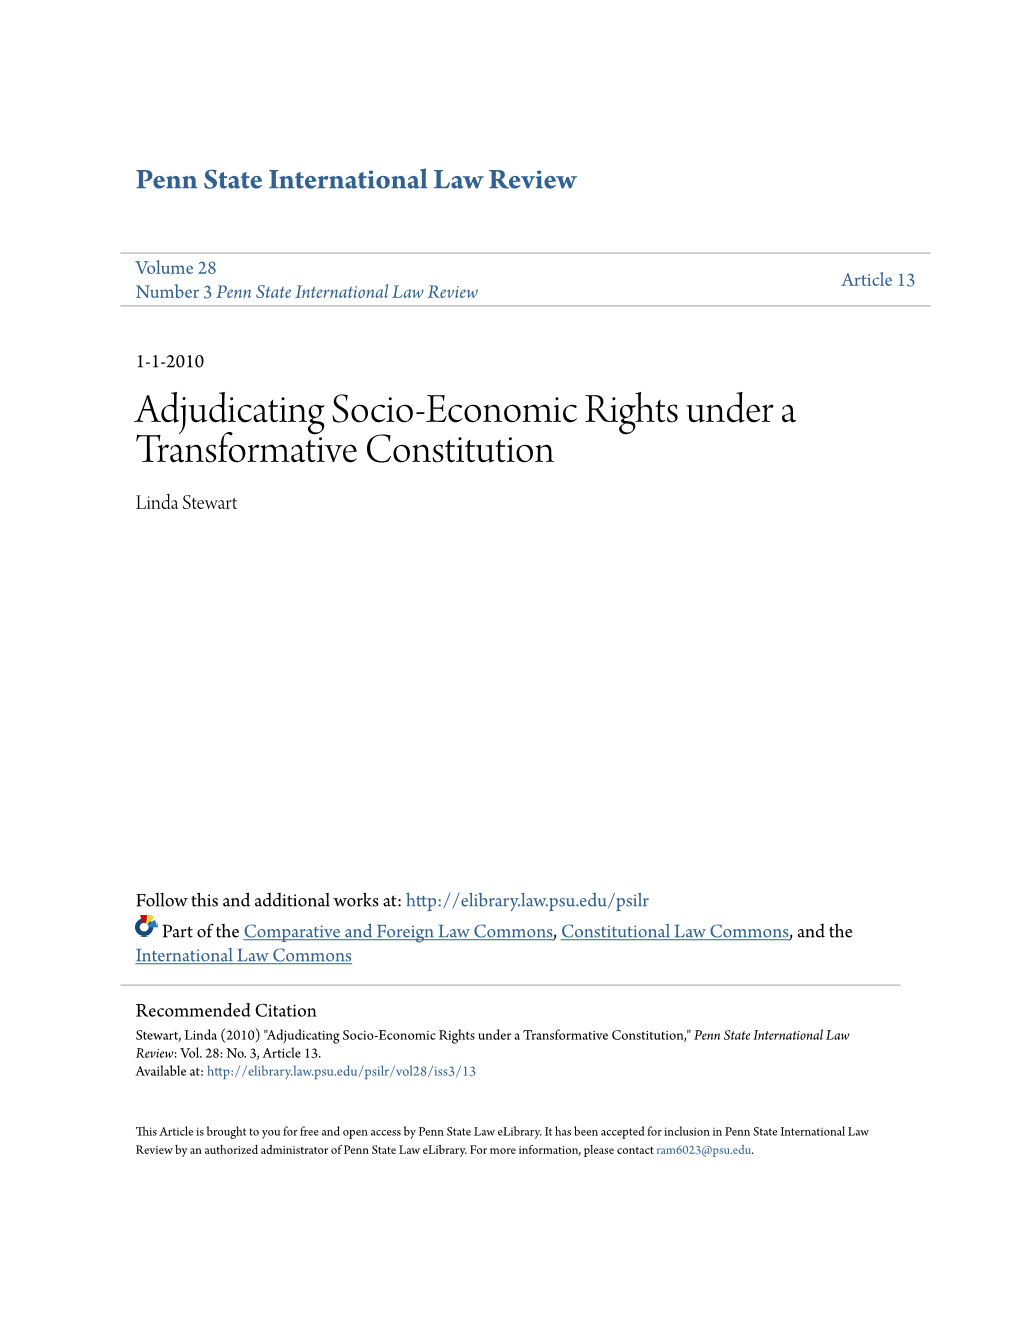 Adjudicating Socio-Economic Rights Under a Transformative Constitution Linda Stewart